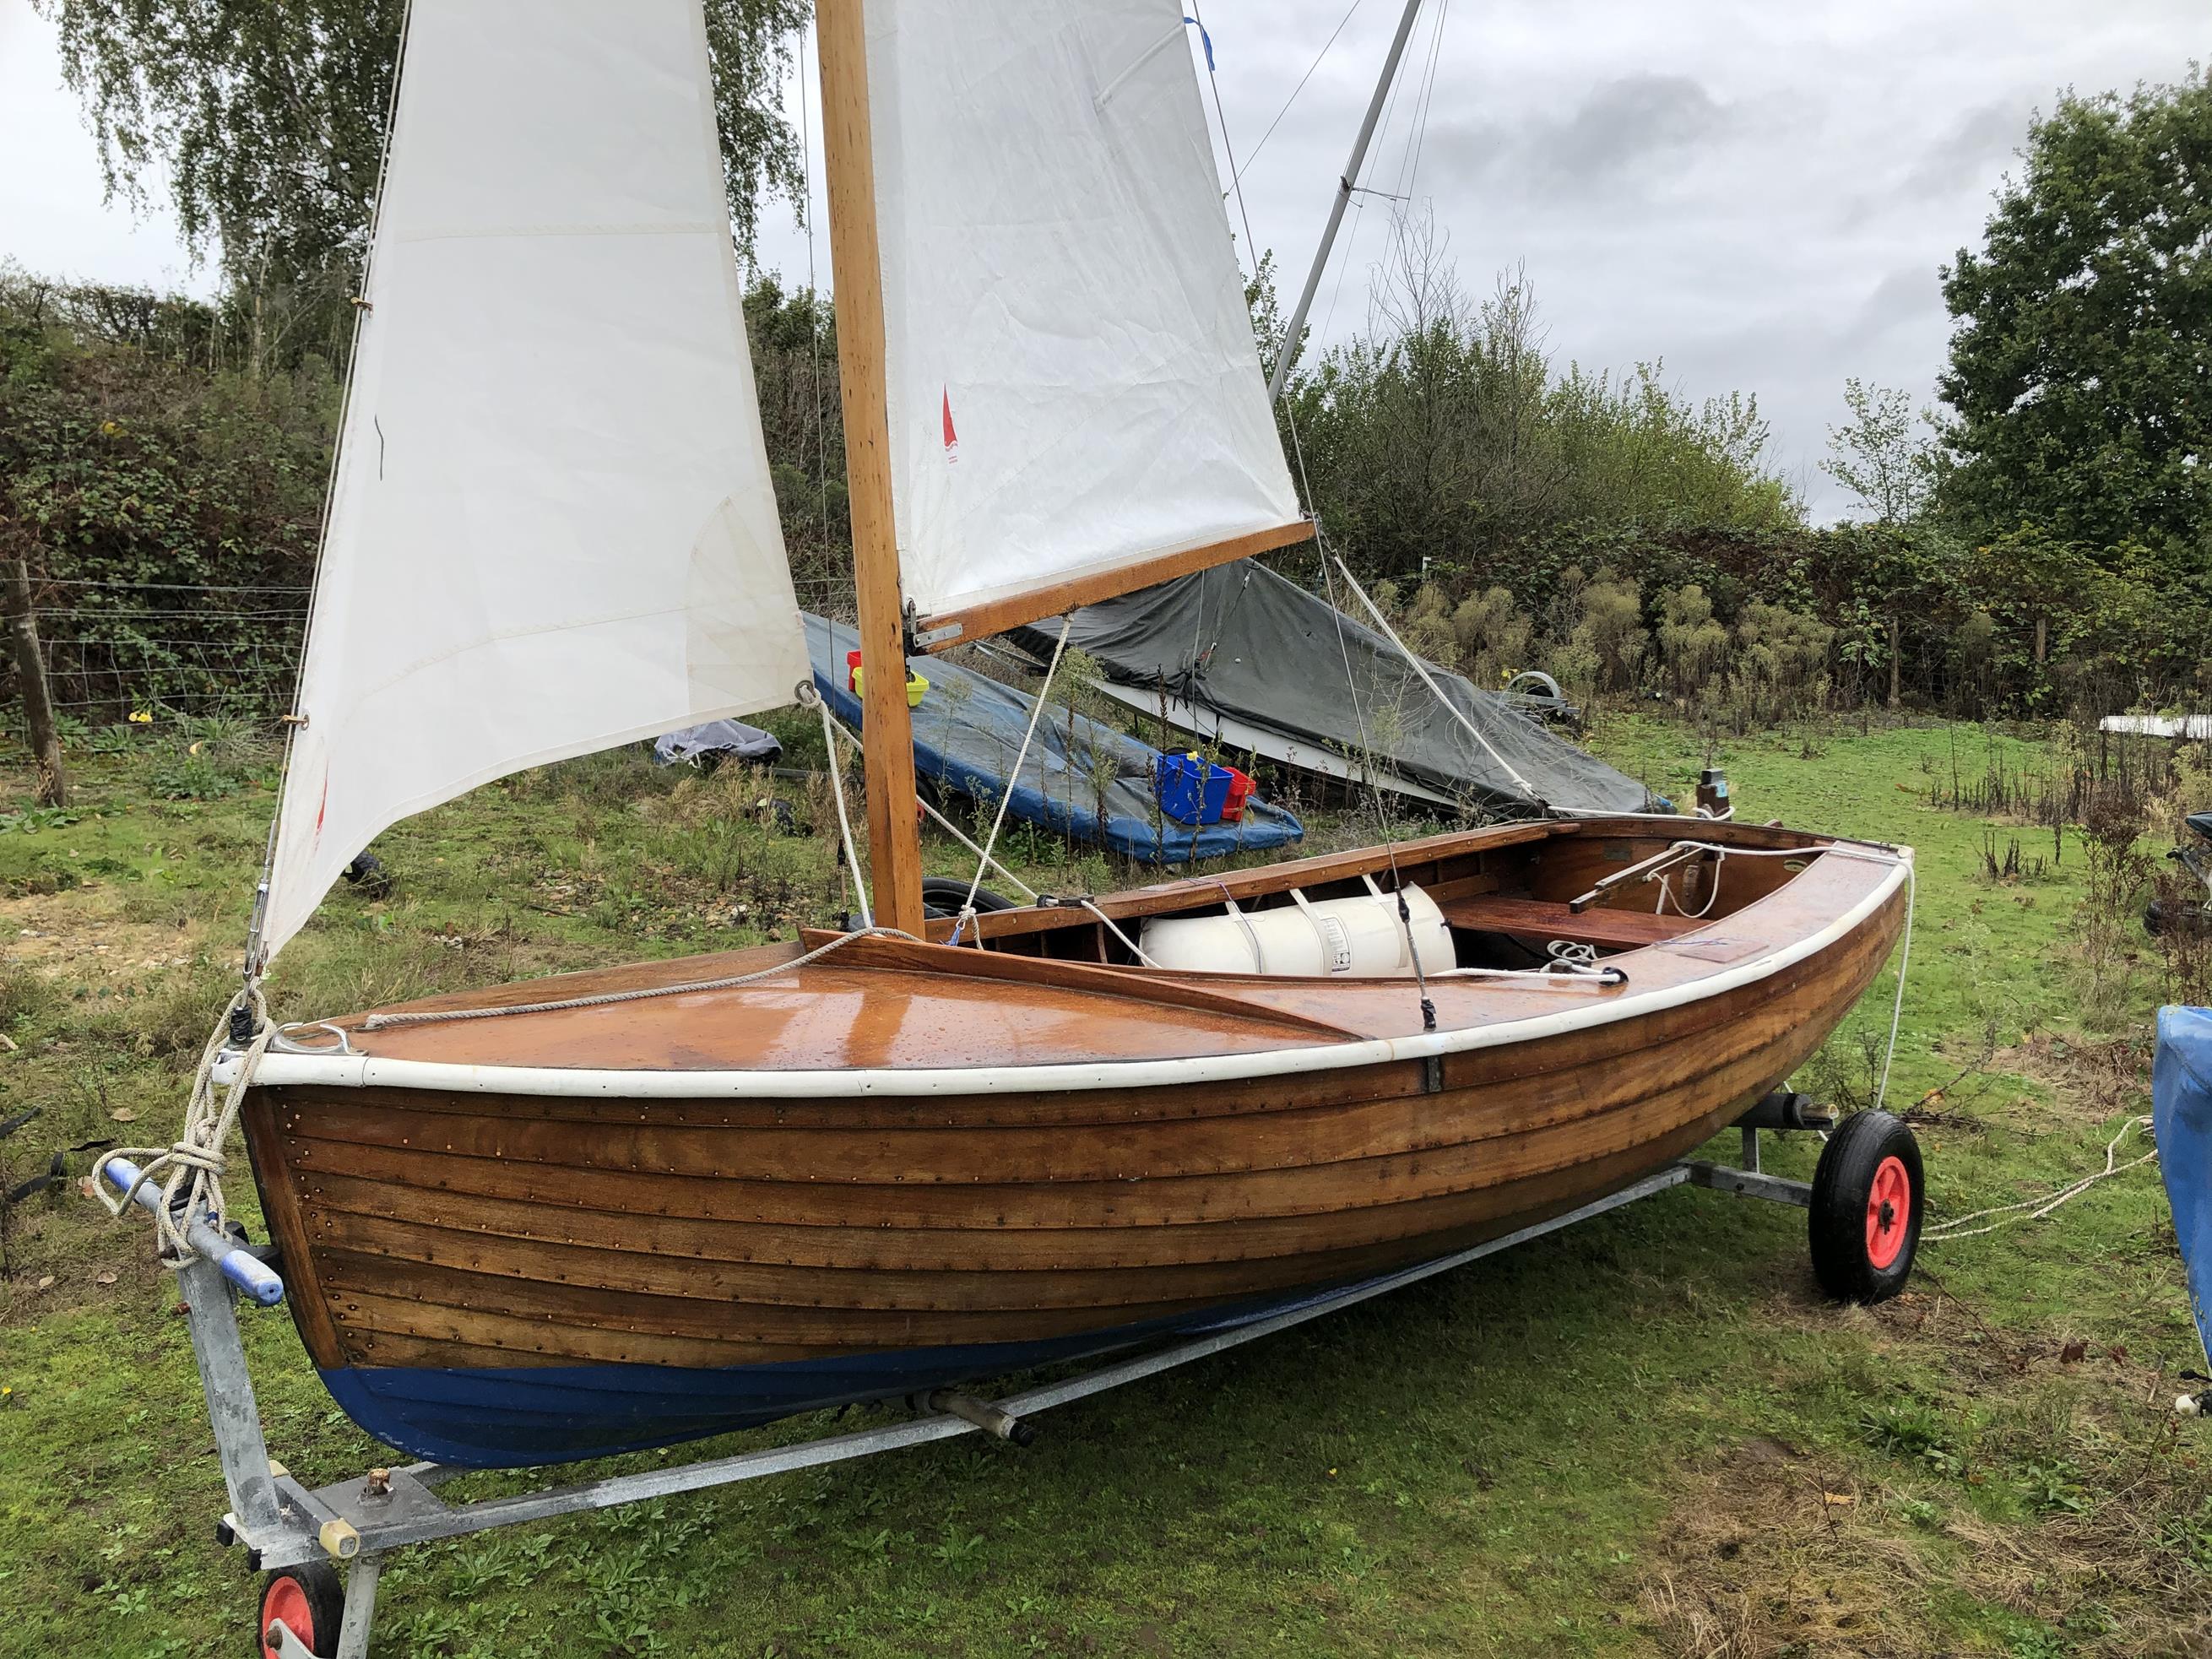 dinghy for sailboat